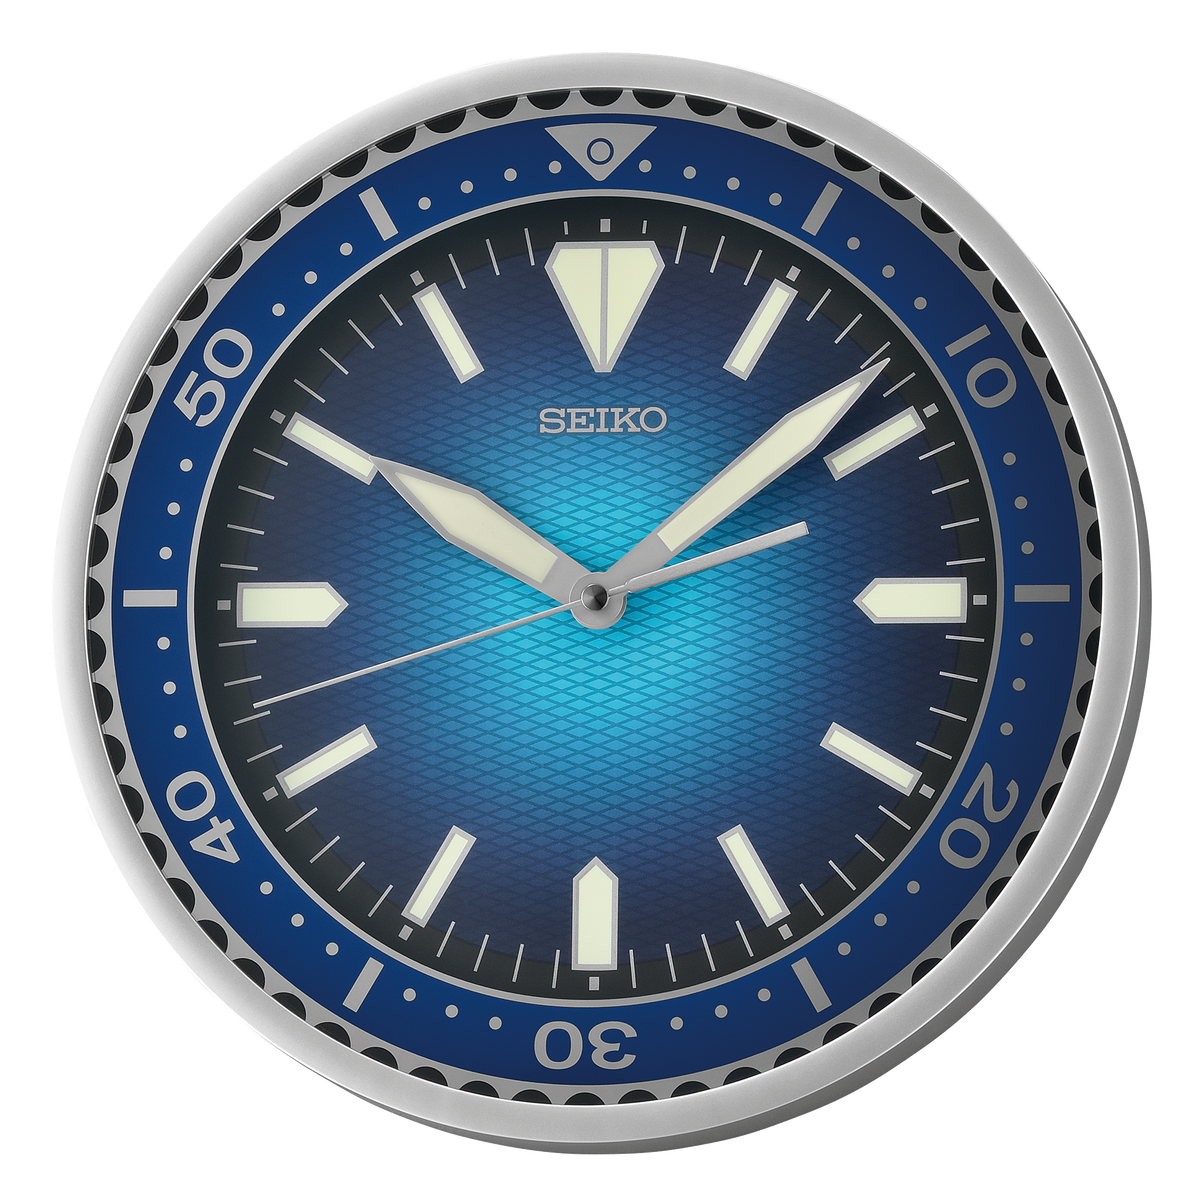 Seiko - Dive style Wall Clock - Blue